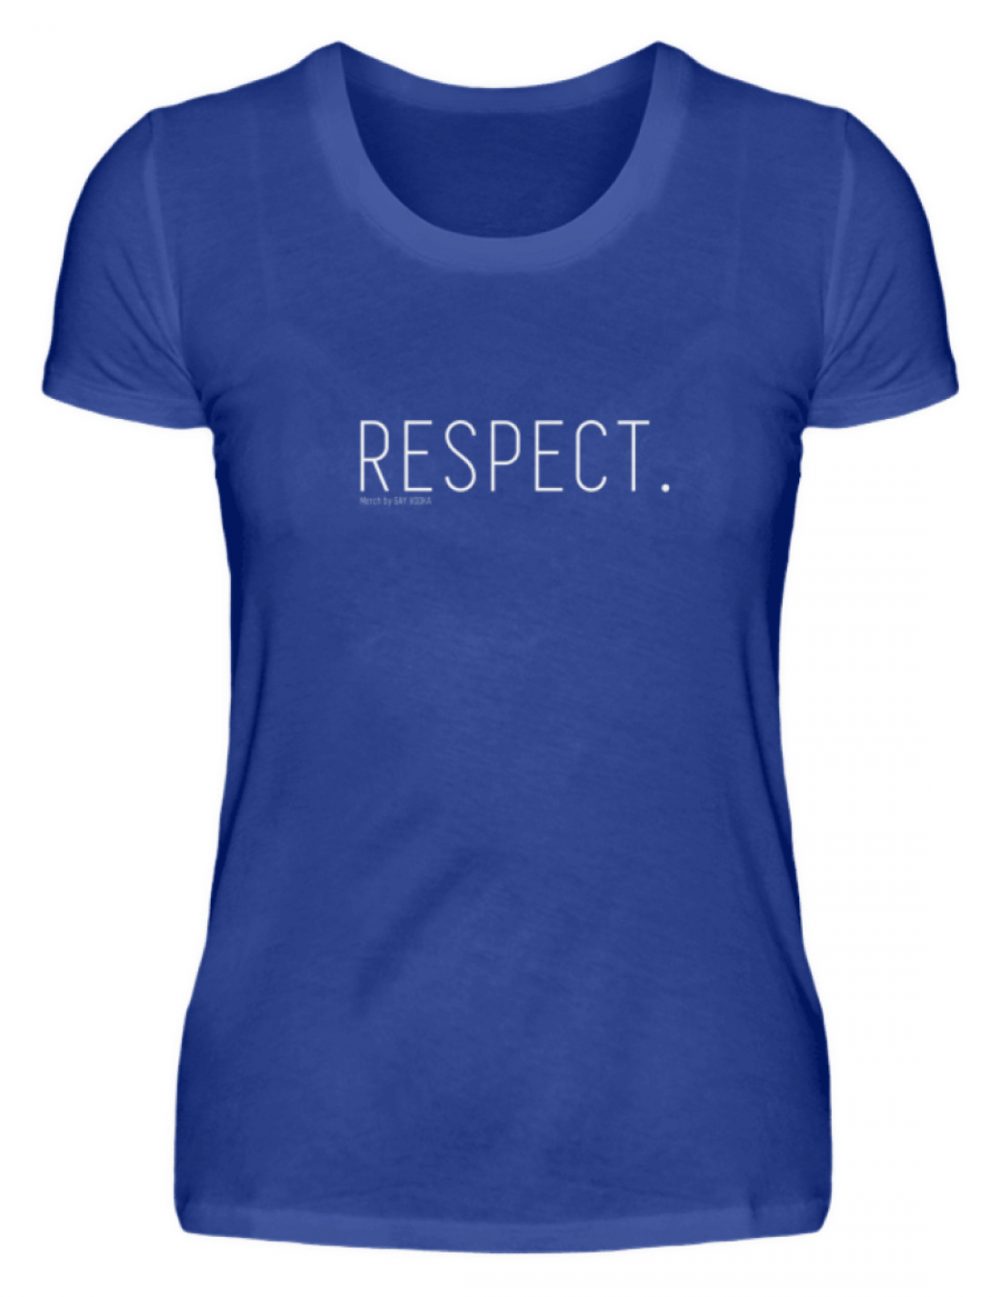 RESPECT. - Damen Premiumshirt-27